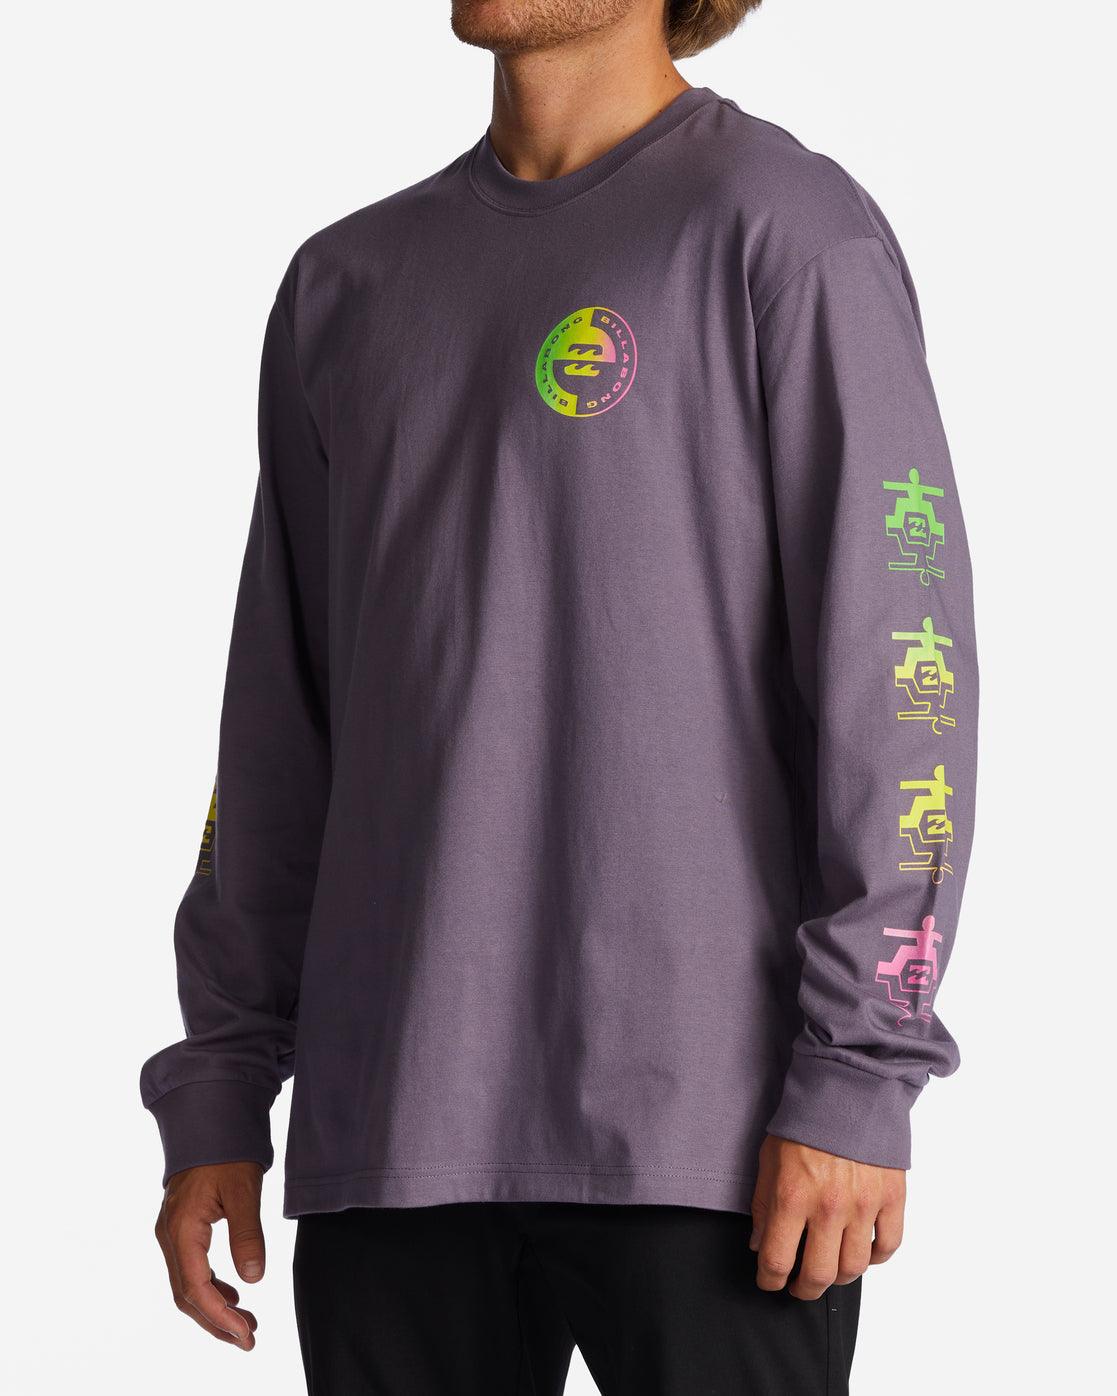 Contrast Long Sleeve TShirt - SoHa Surf Shop